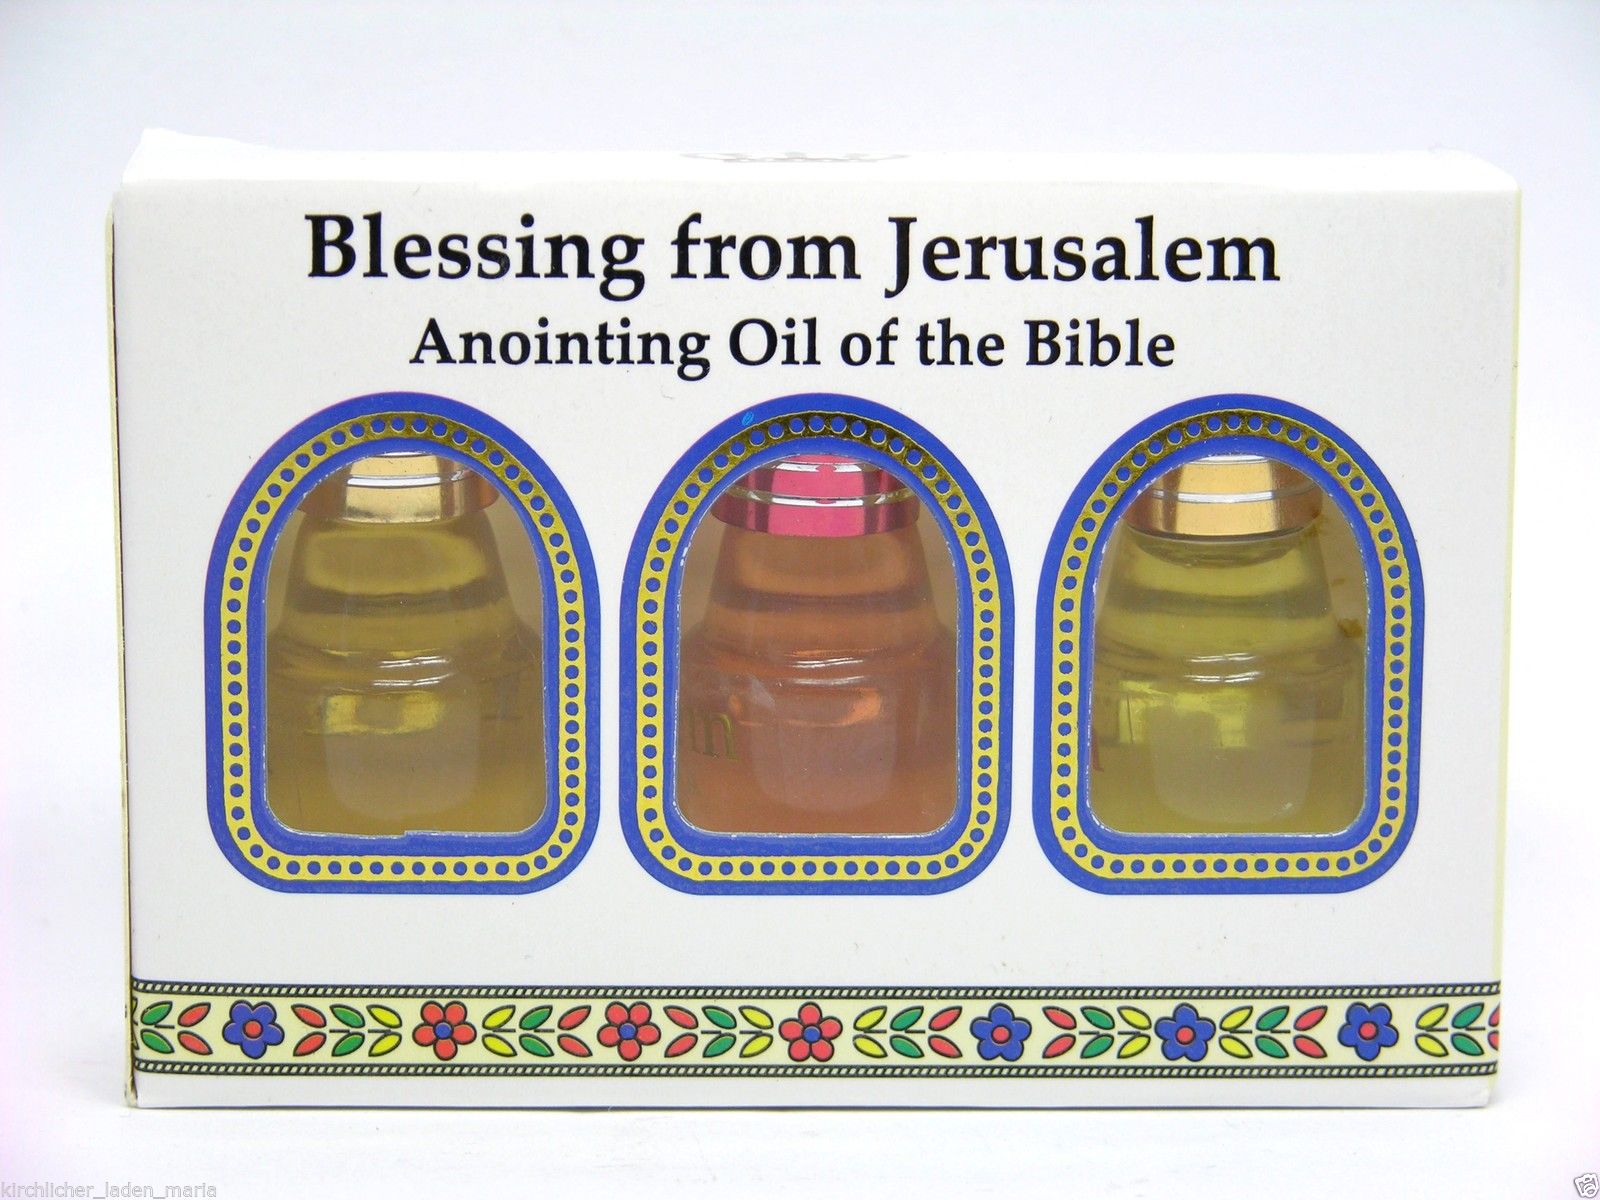 Aromatic oils from Jerusalem